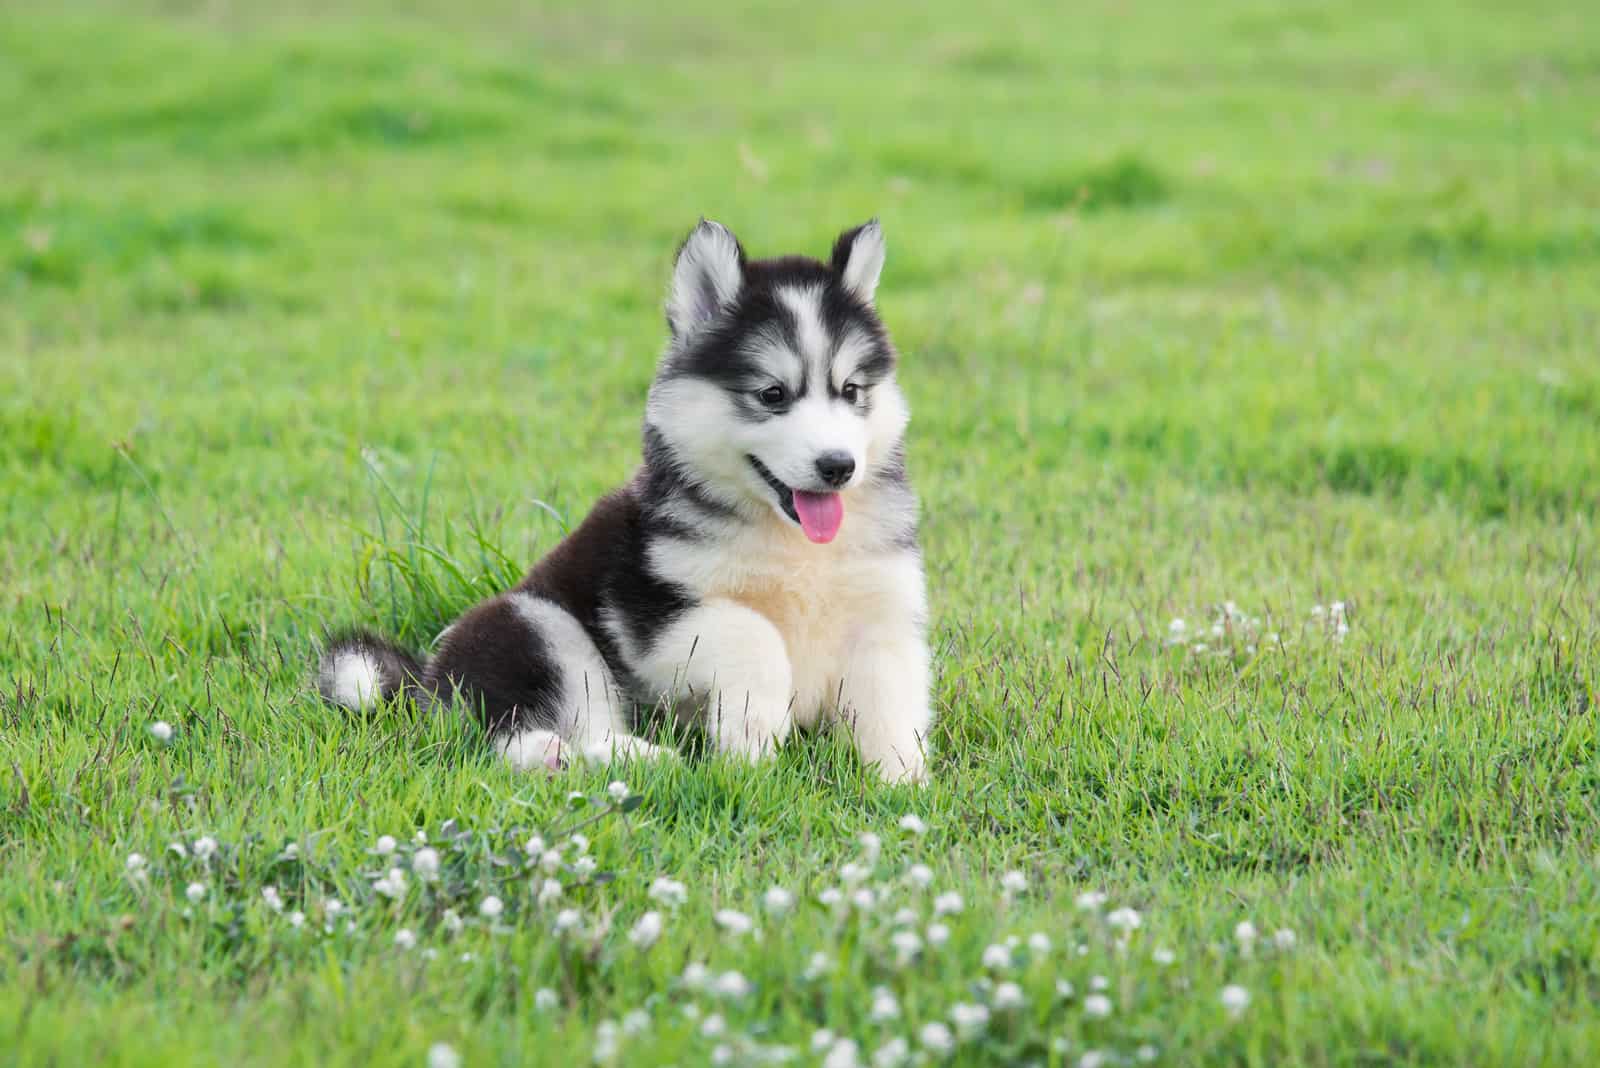 Husky Puppy sitting on grass